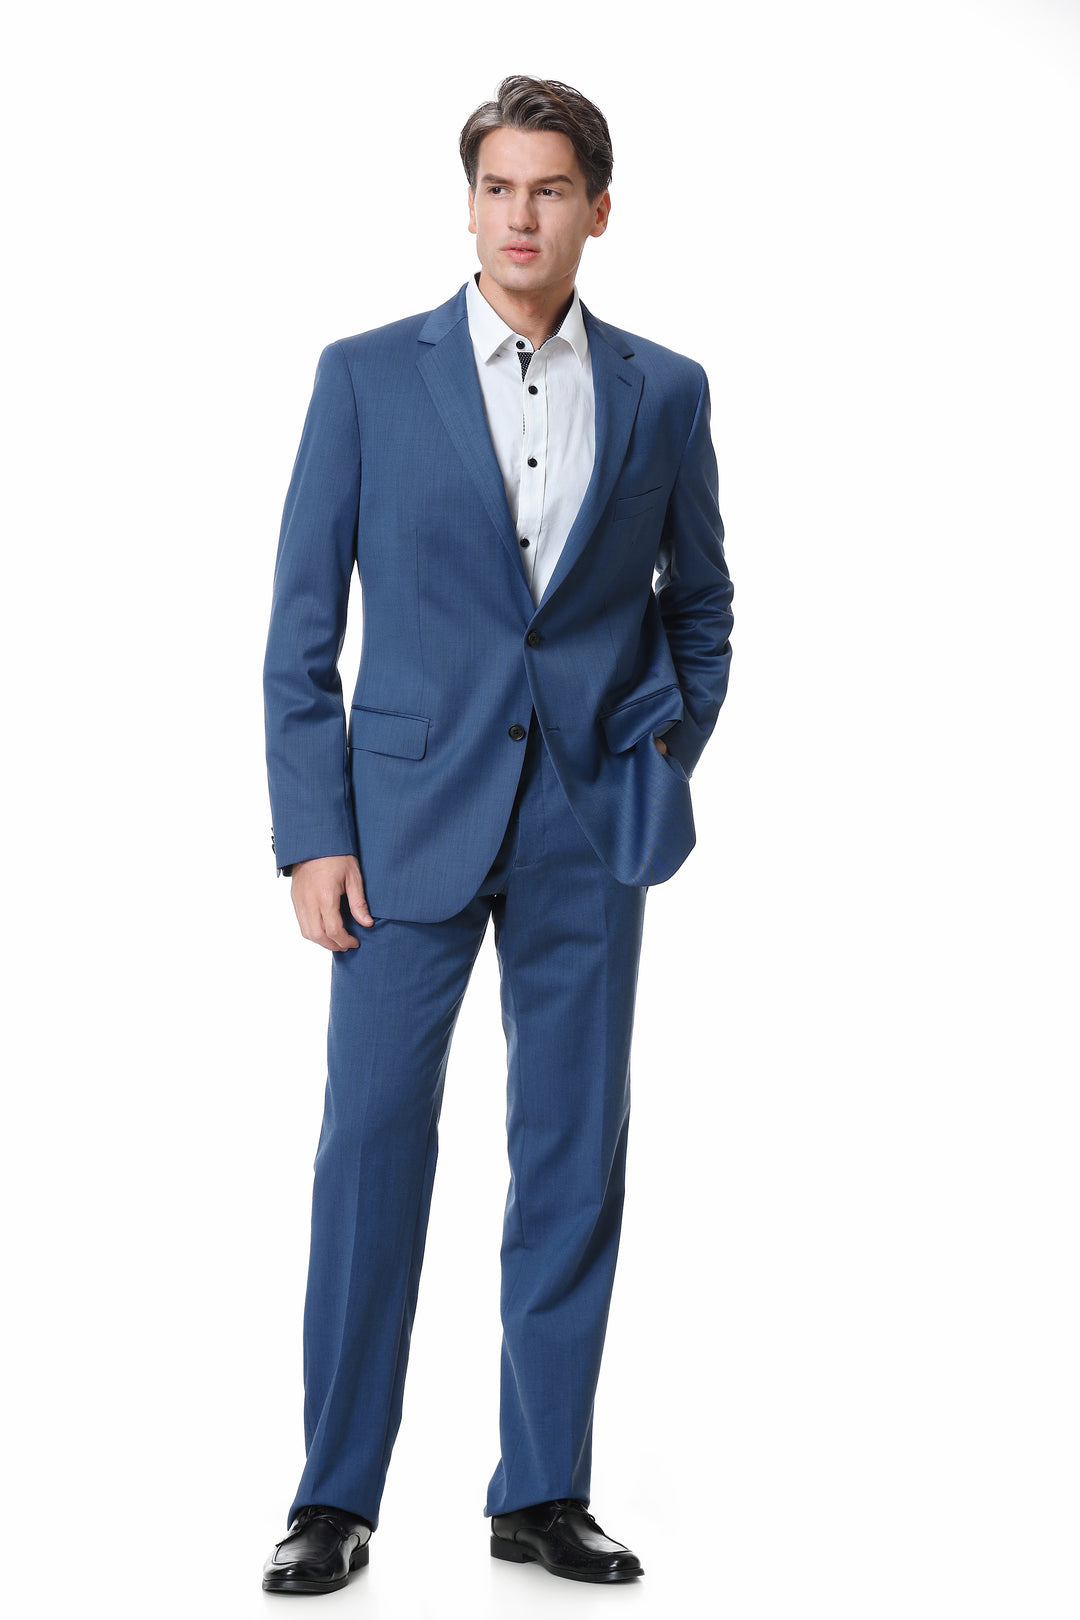 Cobalt Blue Suit Separate Jacket by Daniel Hechter